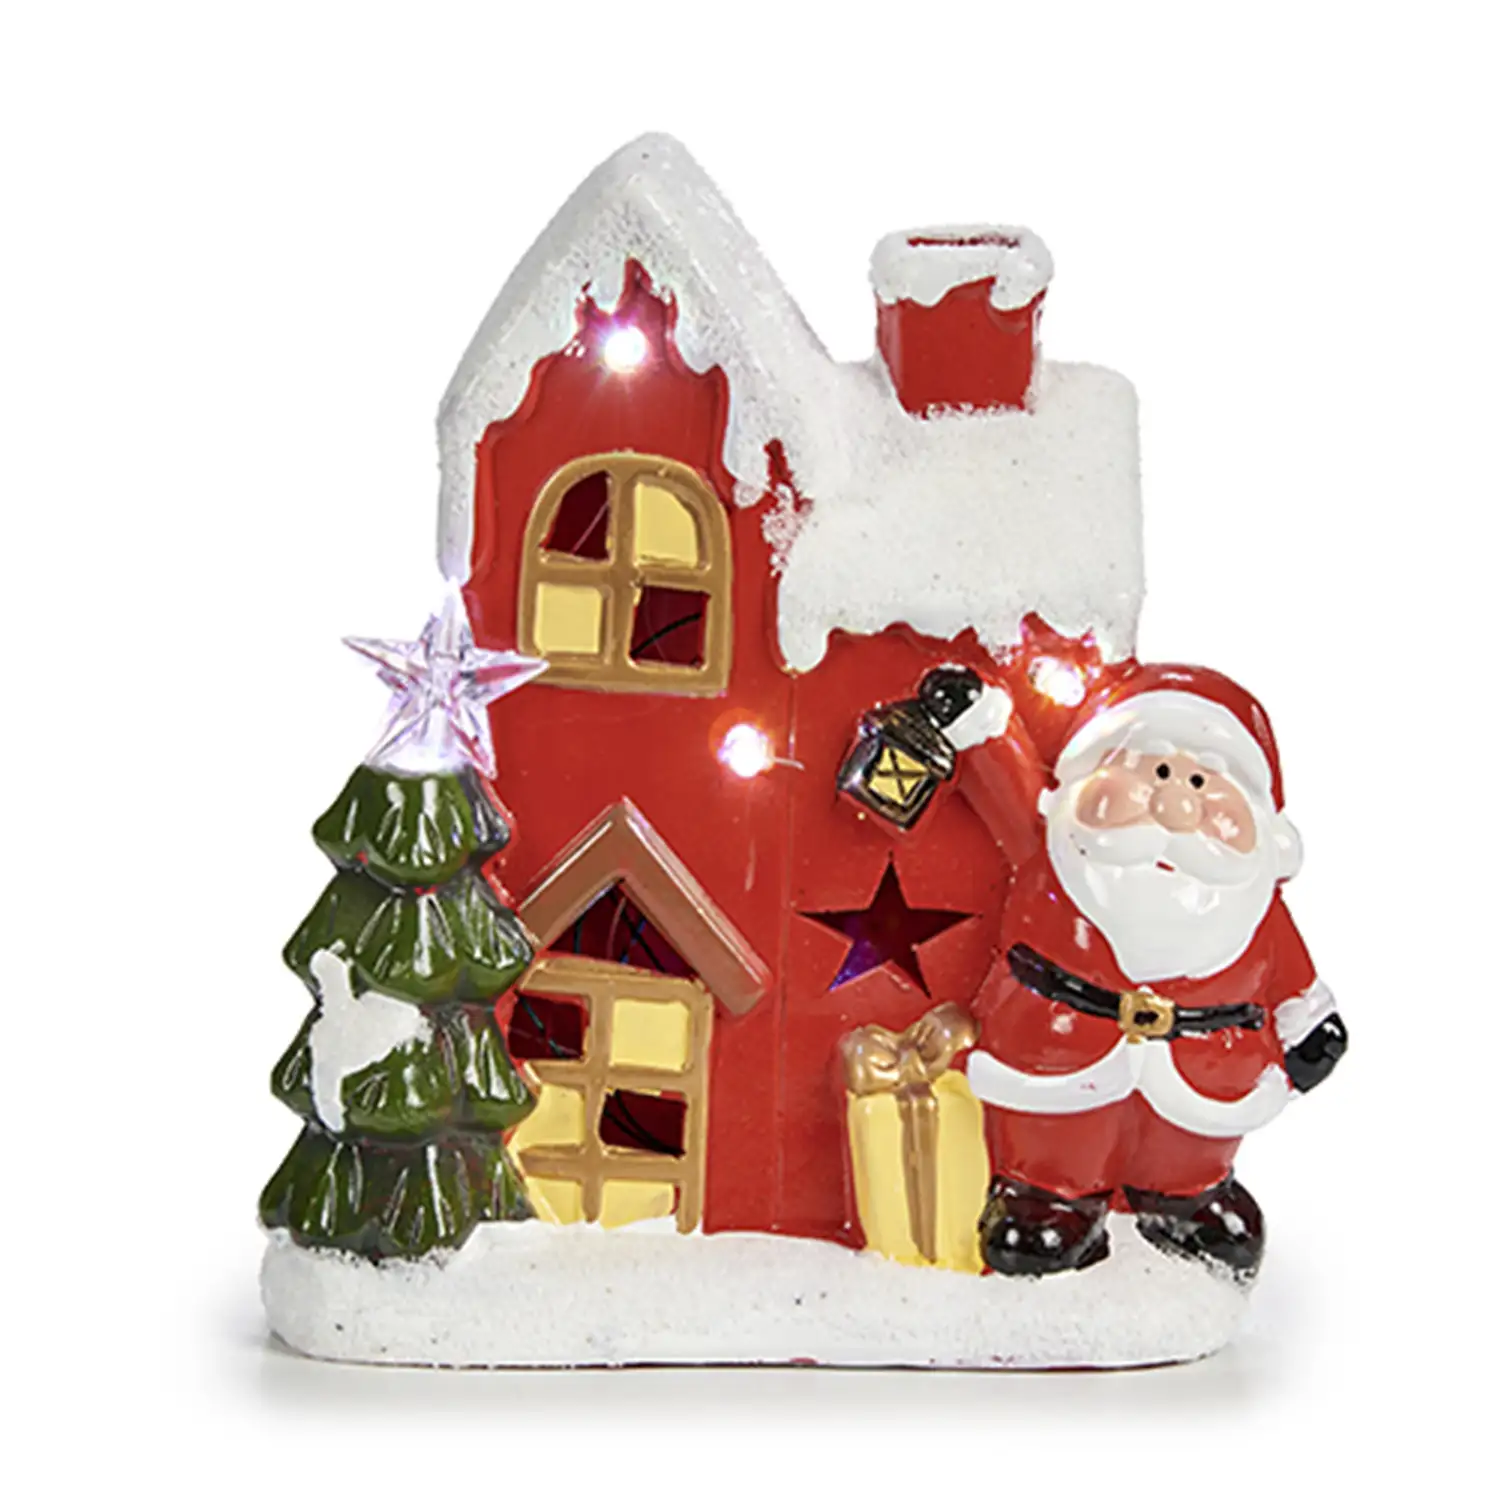 Figura de Papá Noel con casita.